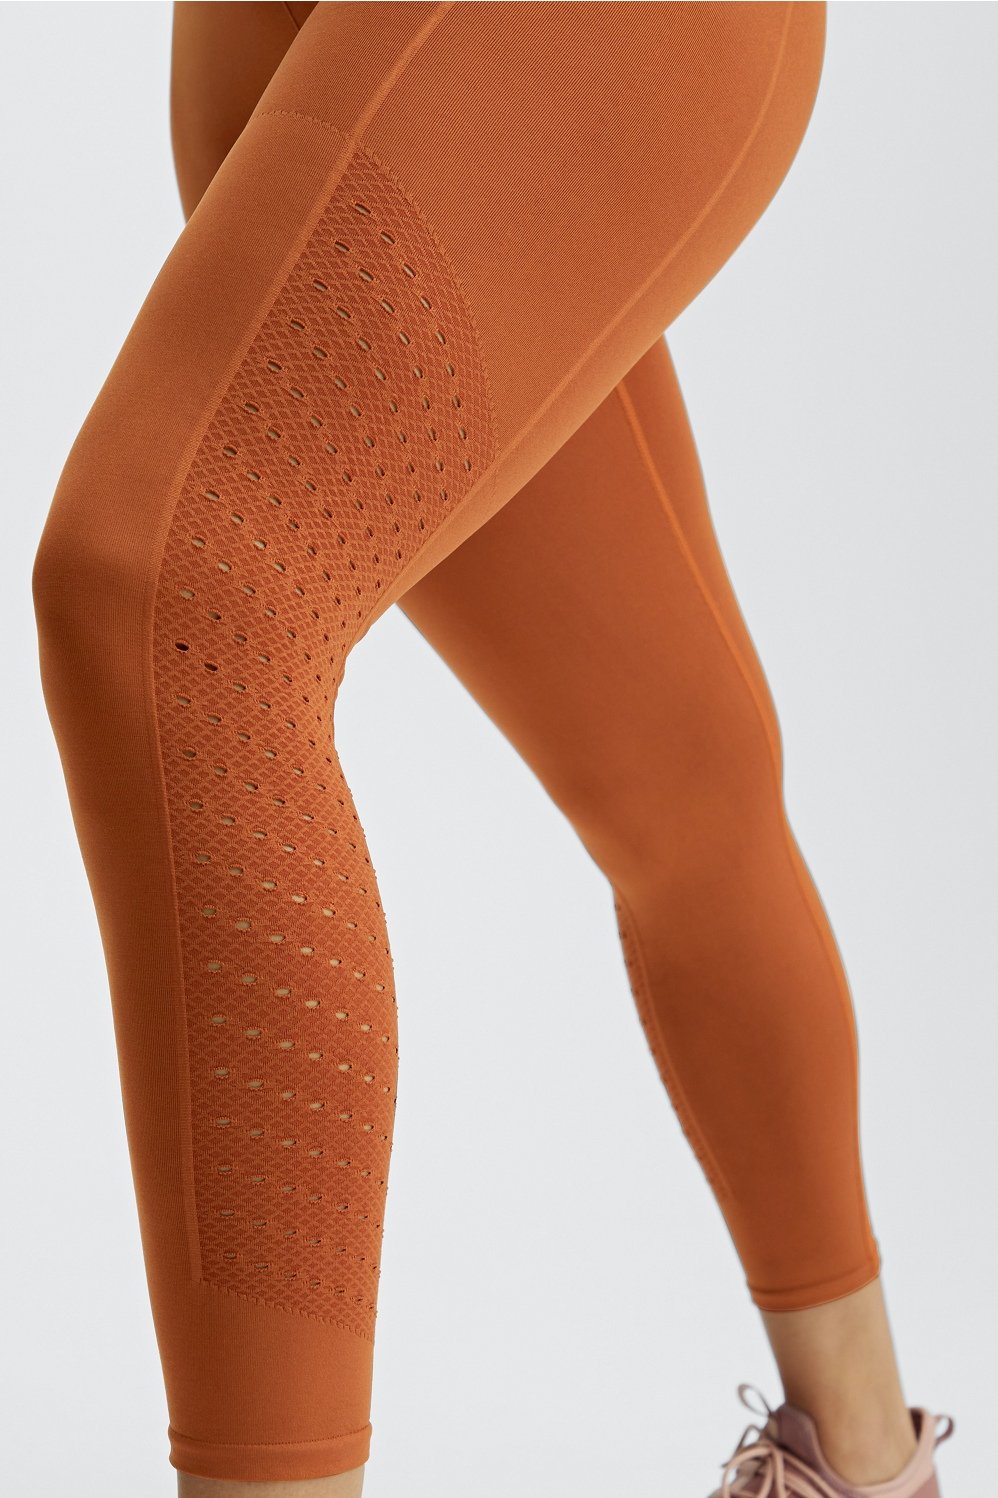 EVERLAST Woman's Light Orange Everlast stretch ribbed leggings